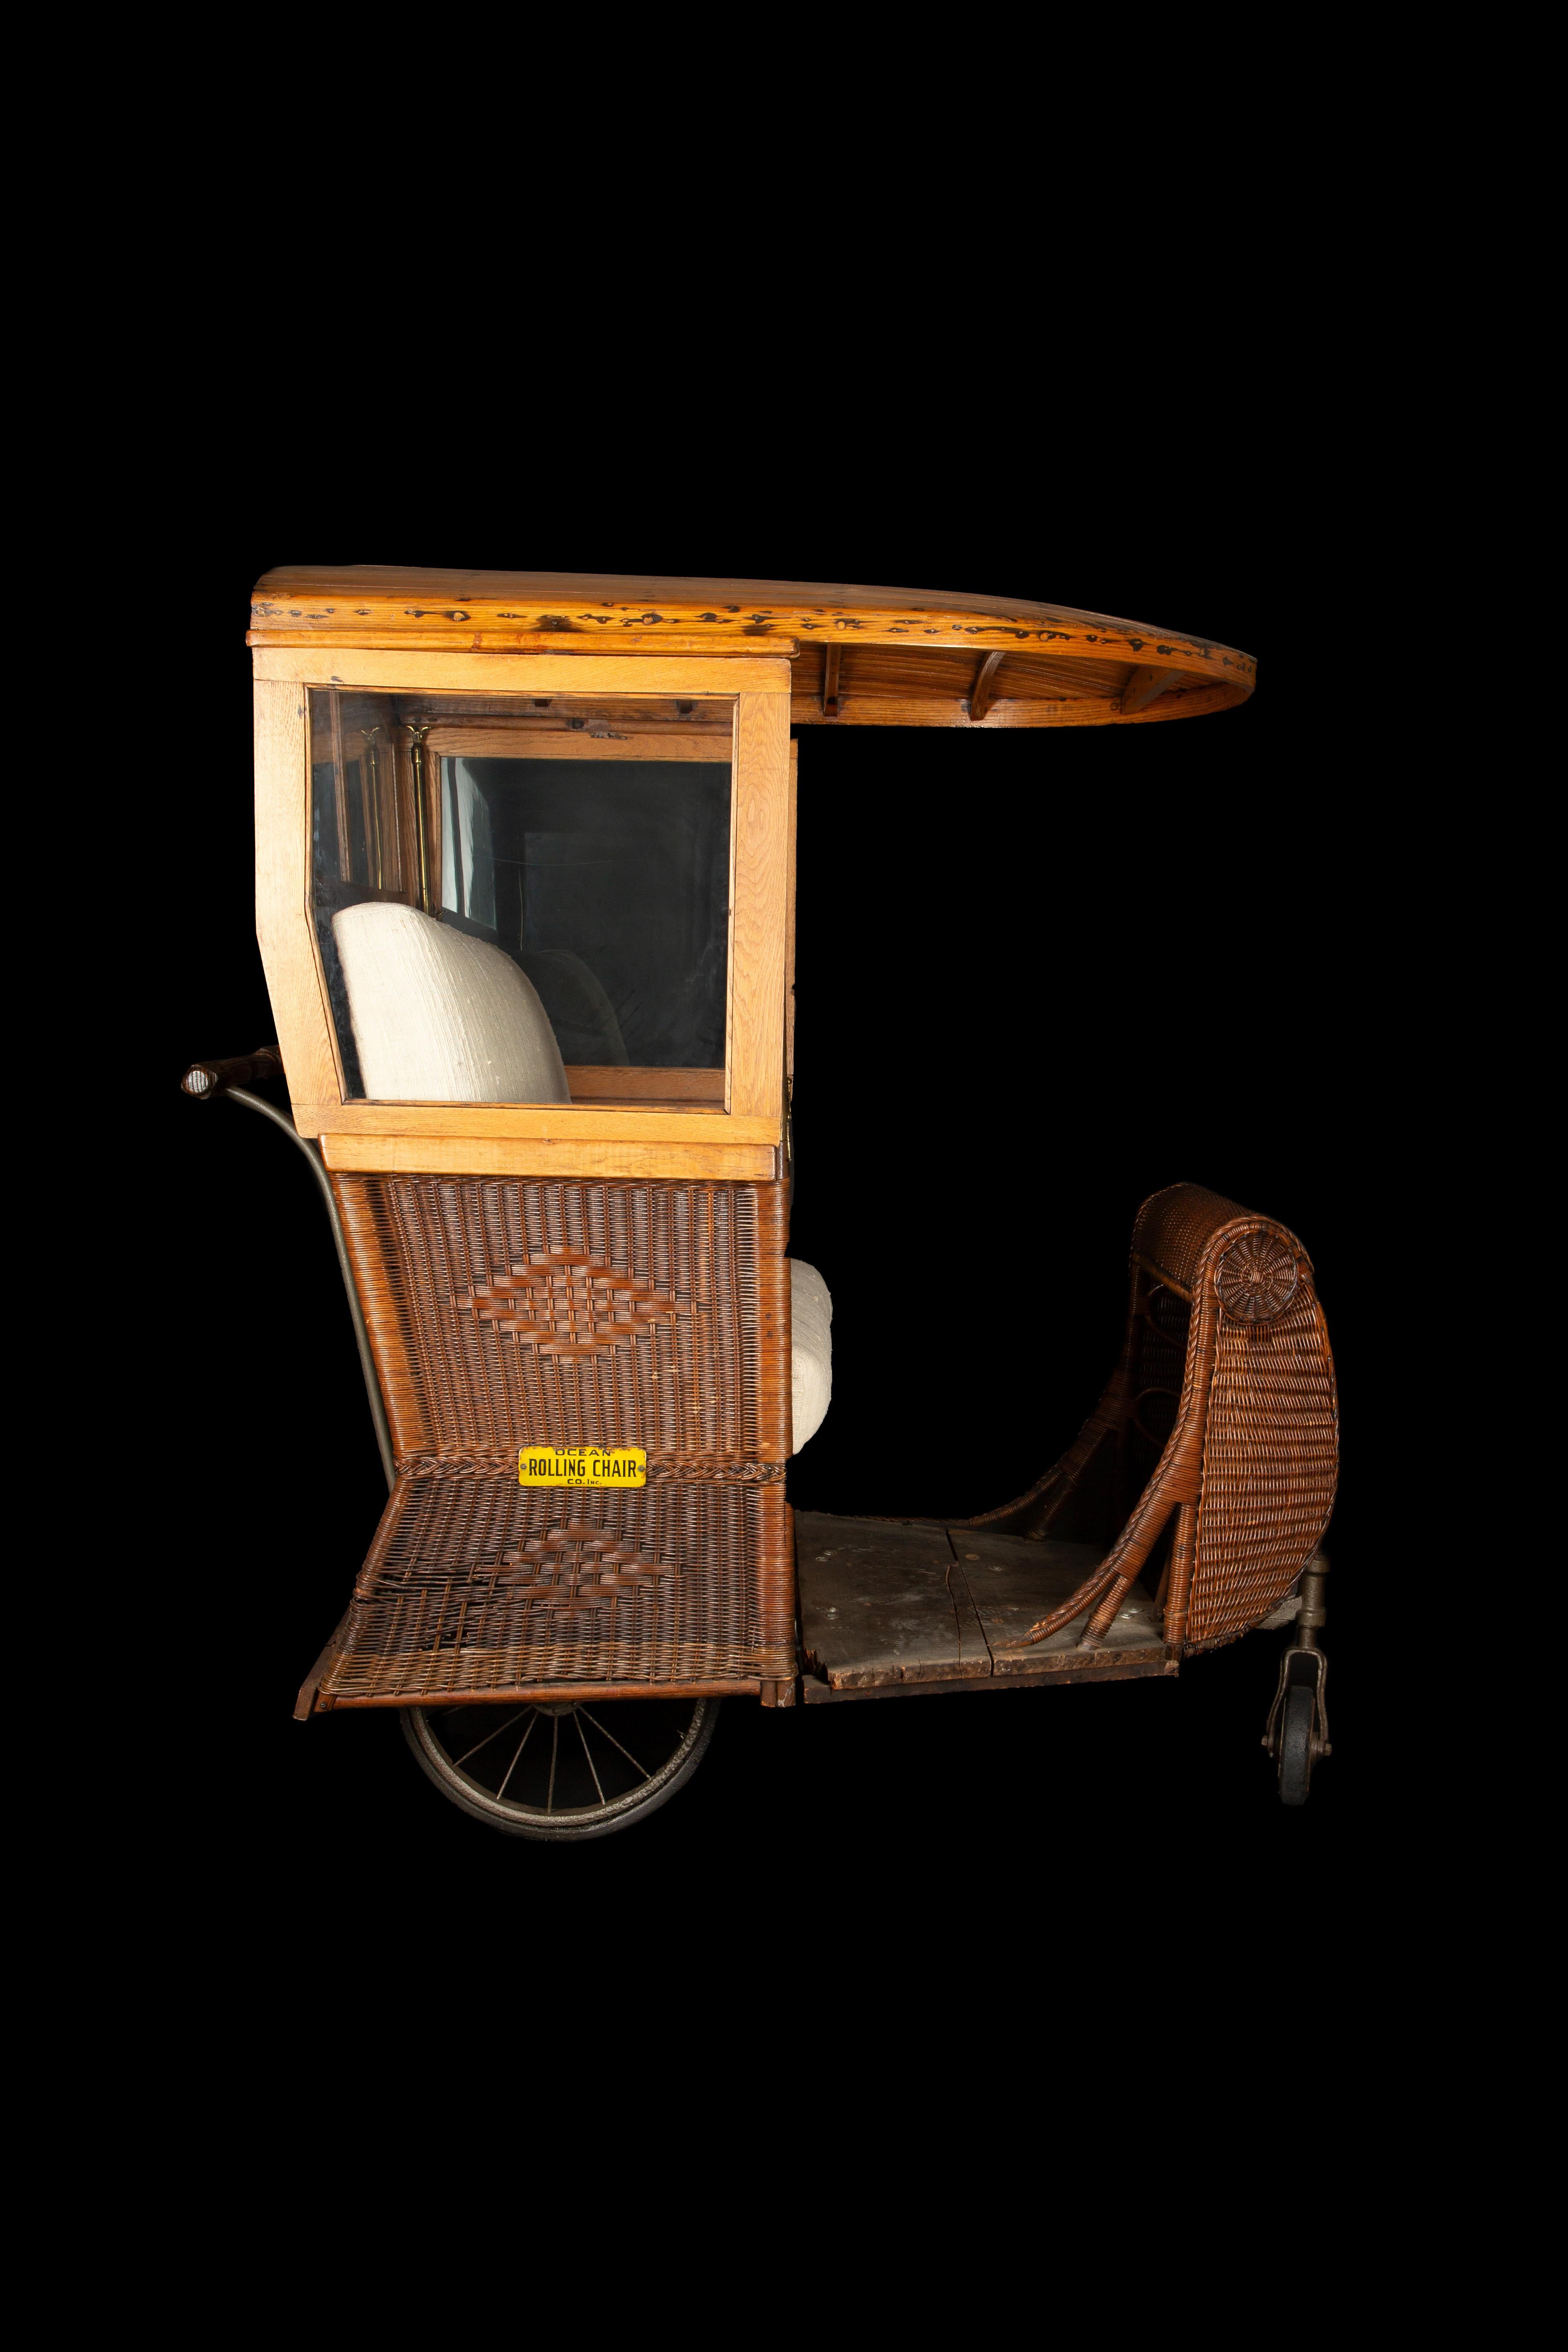 Other Vintage Ocean Rolling Chair Co. Inc. Boardwalk Cart: A Timeless Seaside Treasure For Sale